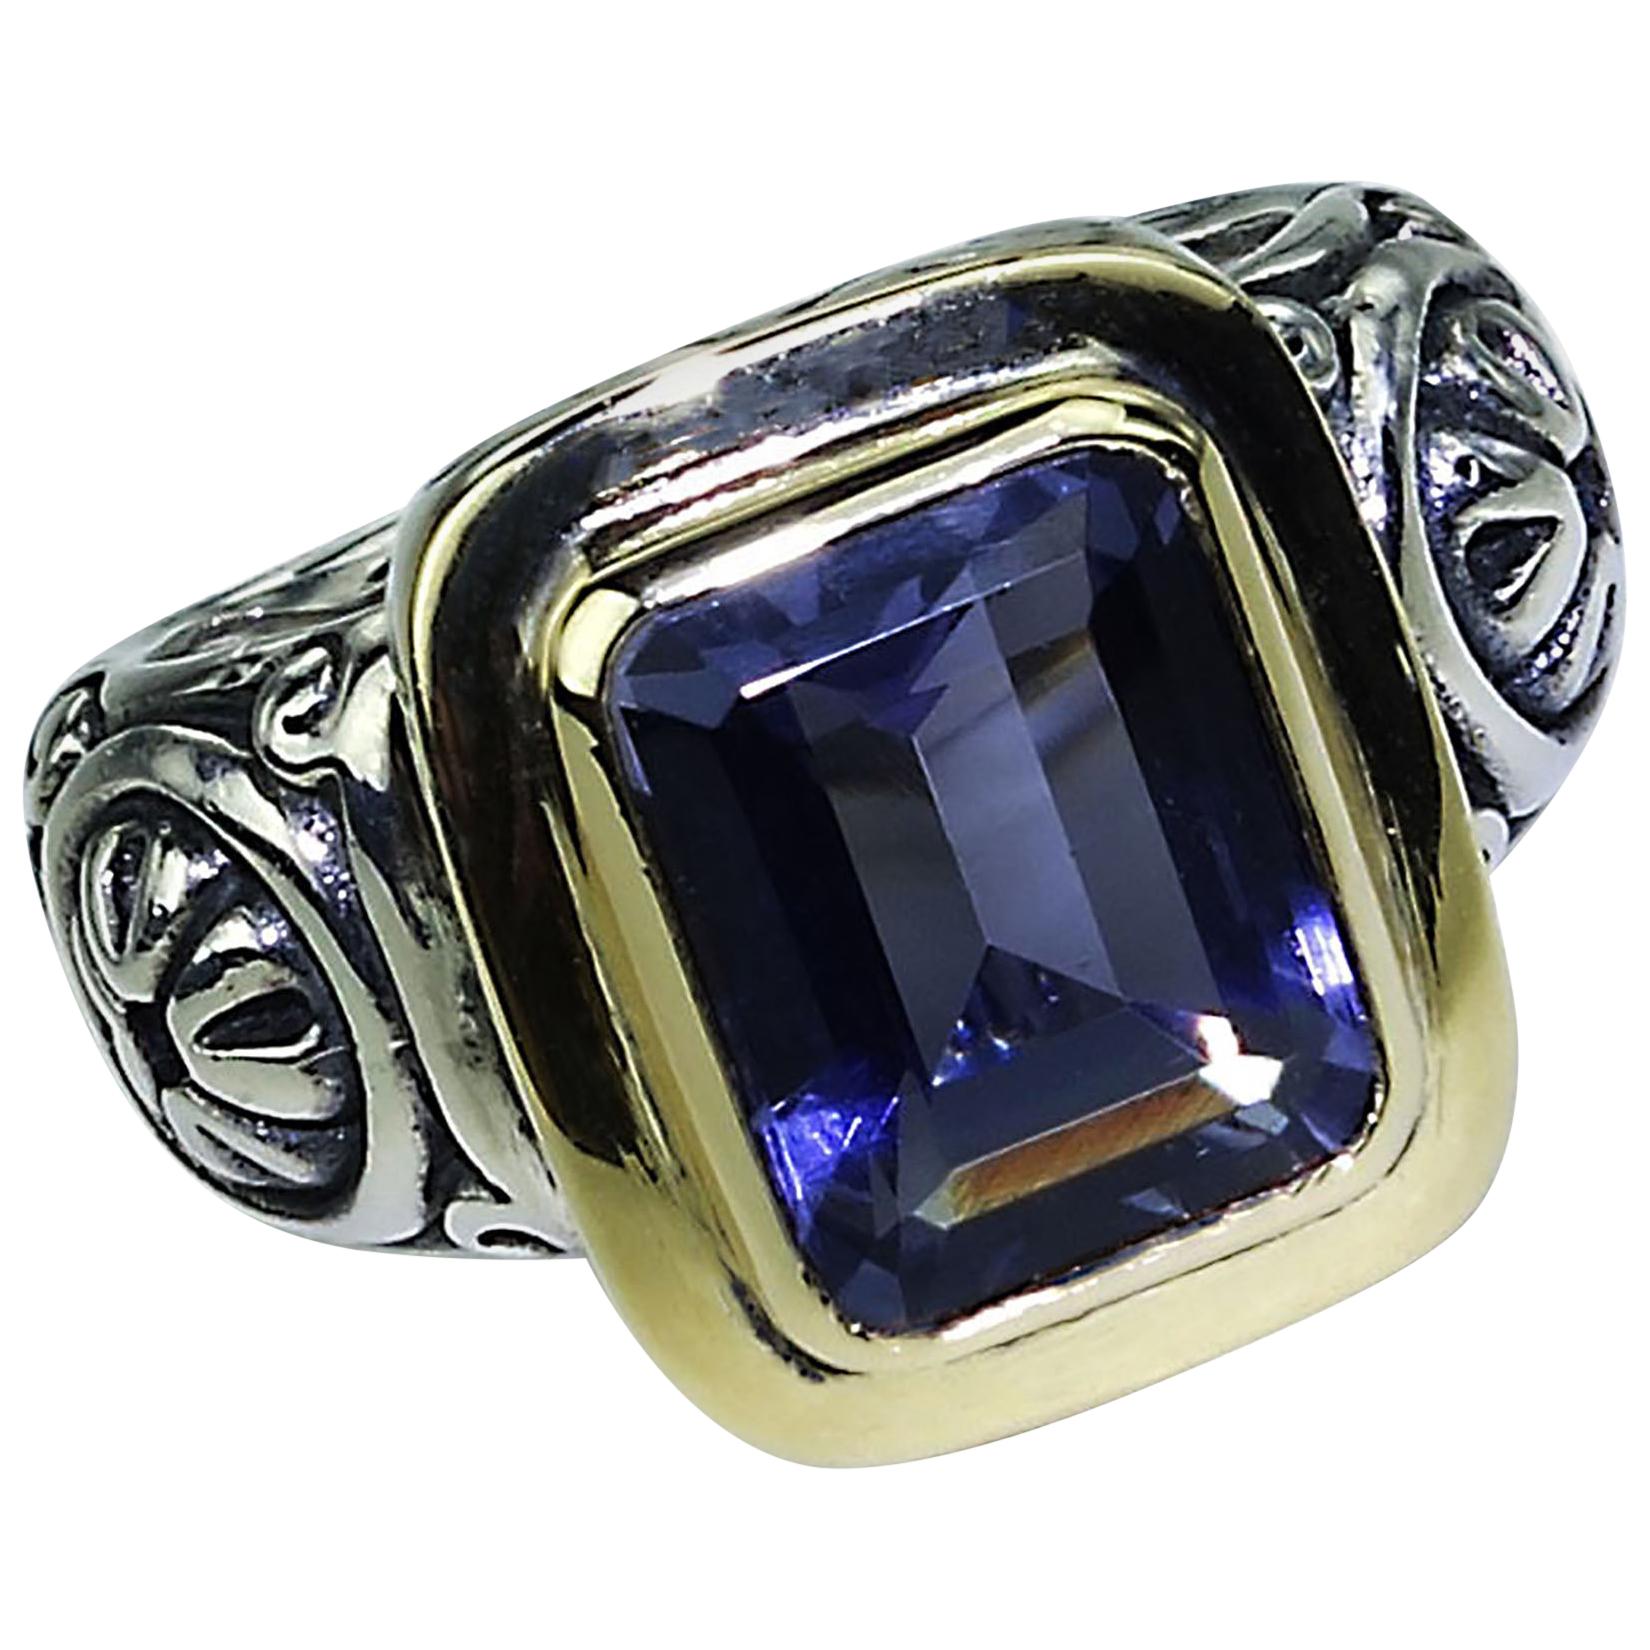 AJD  Sparkling Blue Iolite in Sterling Silver Ring with 18 Karat Gold 